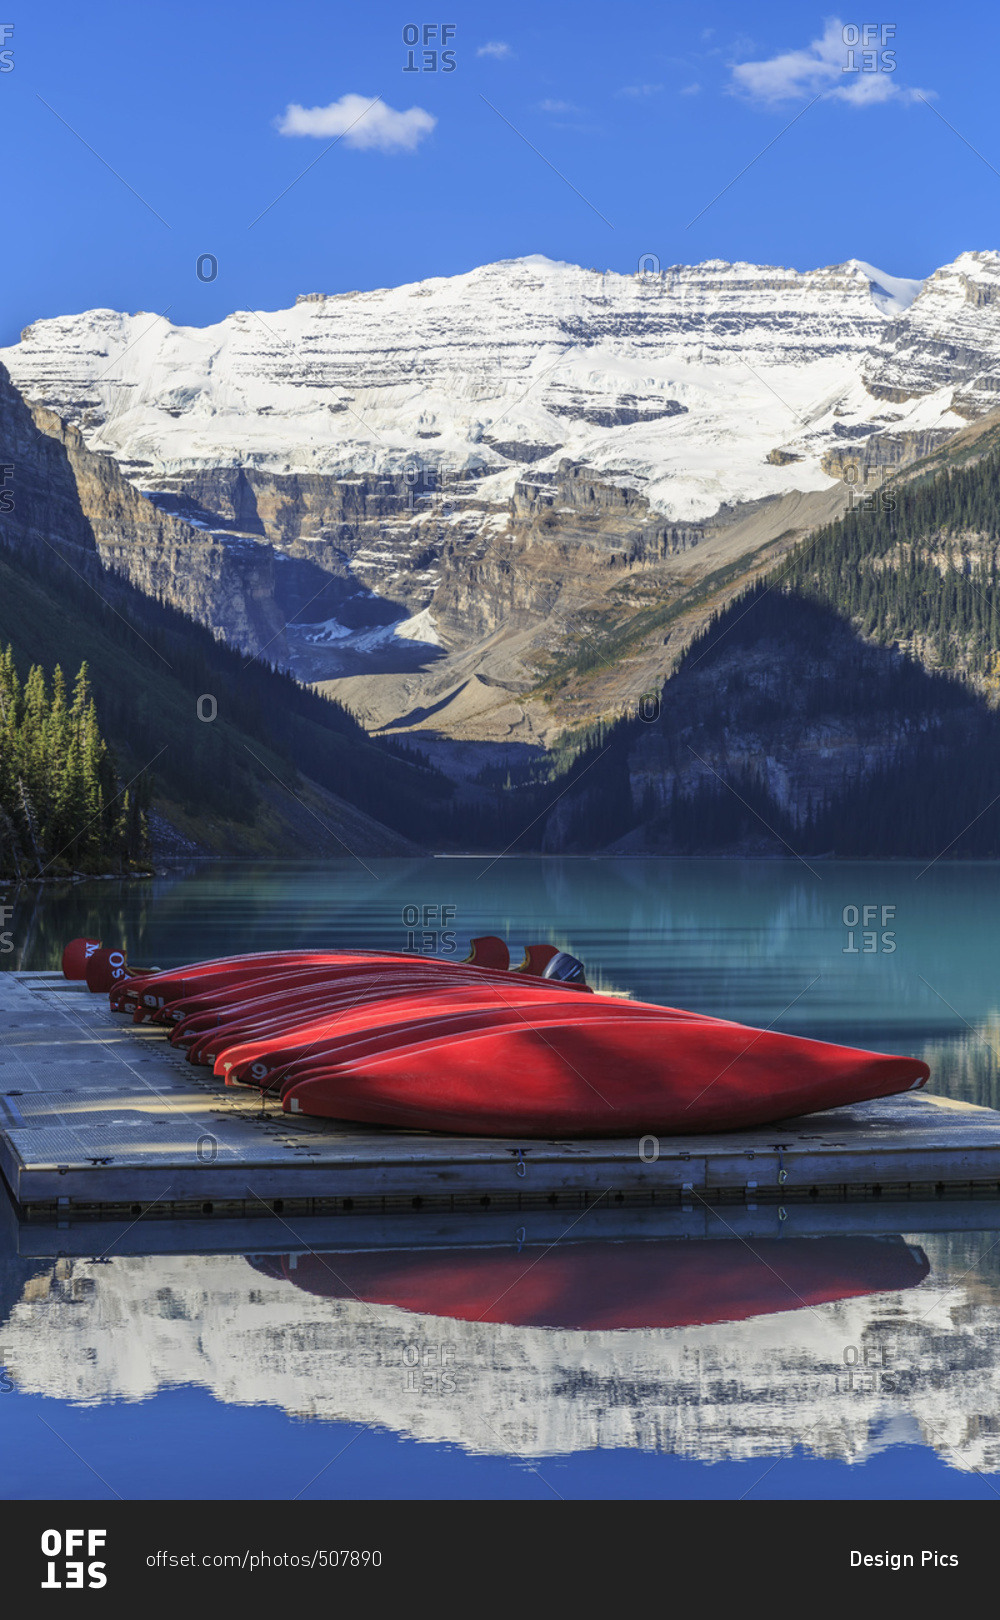 Rental canoes on Lake Louise; Alberta, Canada